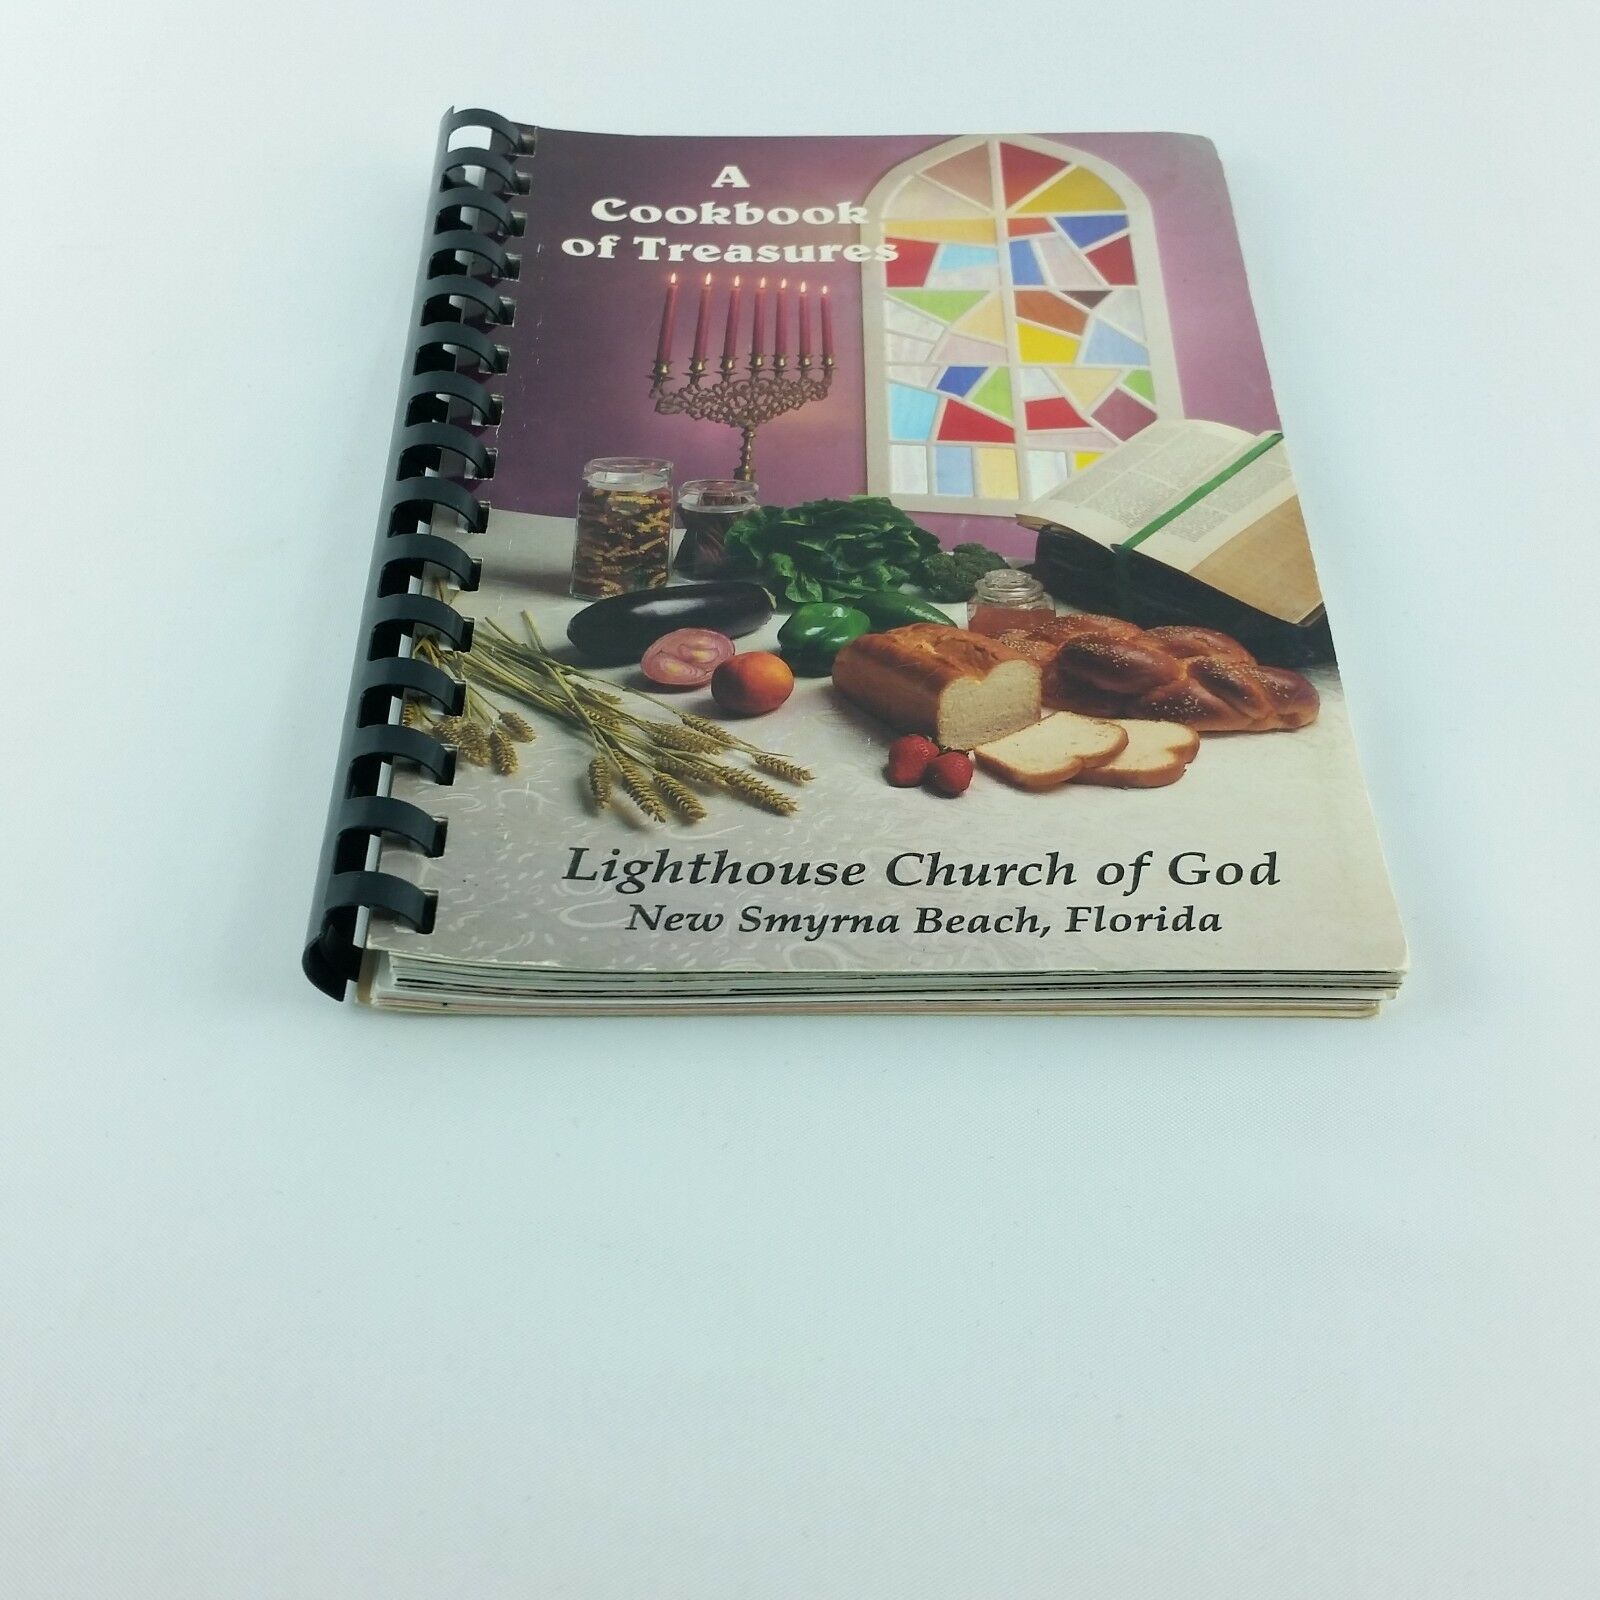 Vintage Florida Cookbook New Smyrna Beach Lighthouse Church of God Treasures - At Grandma's Table